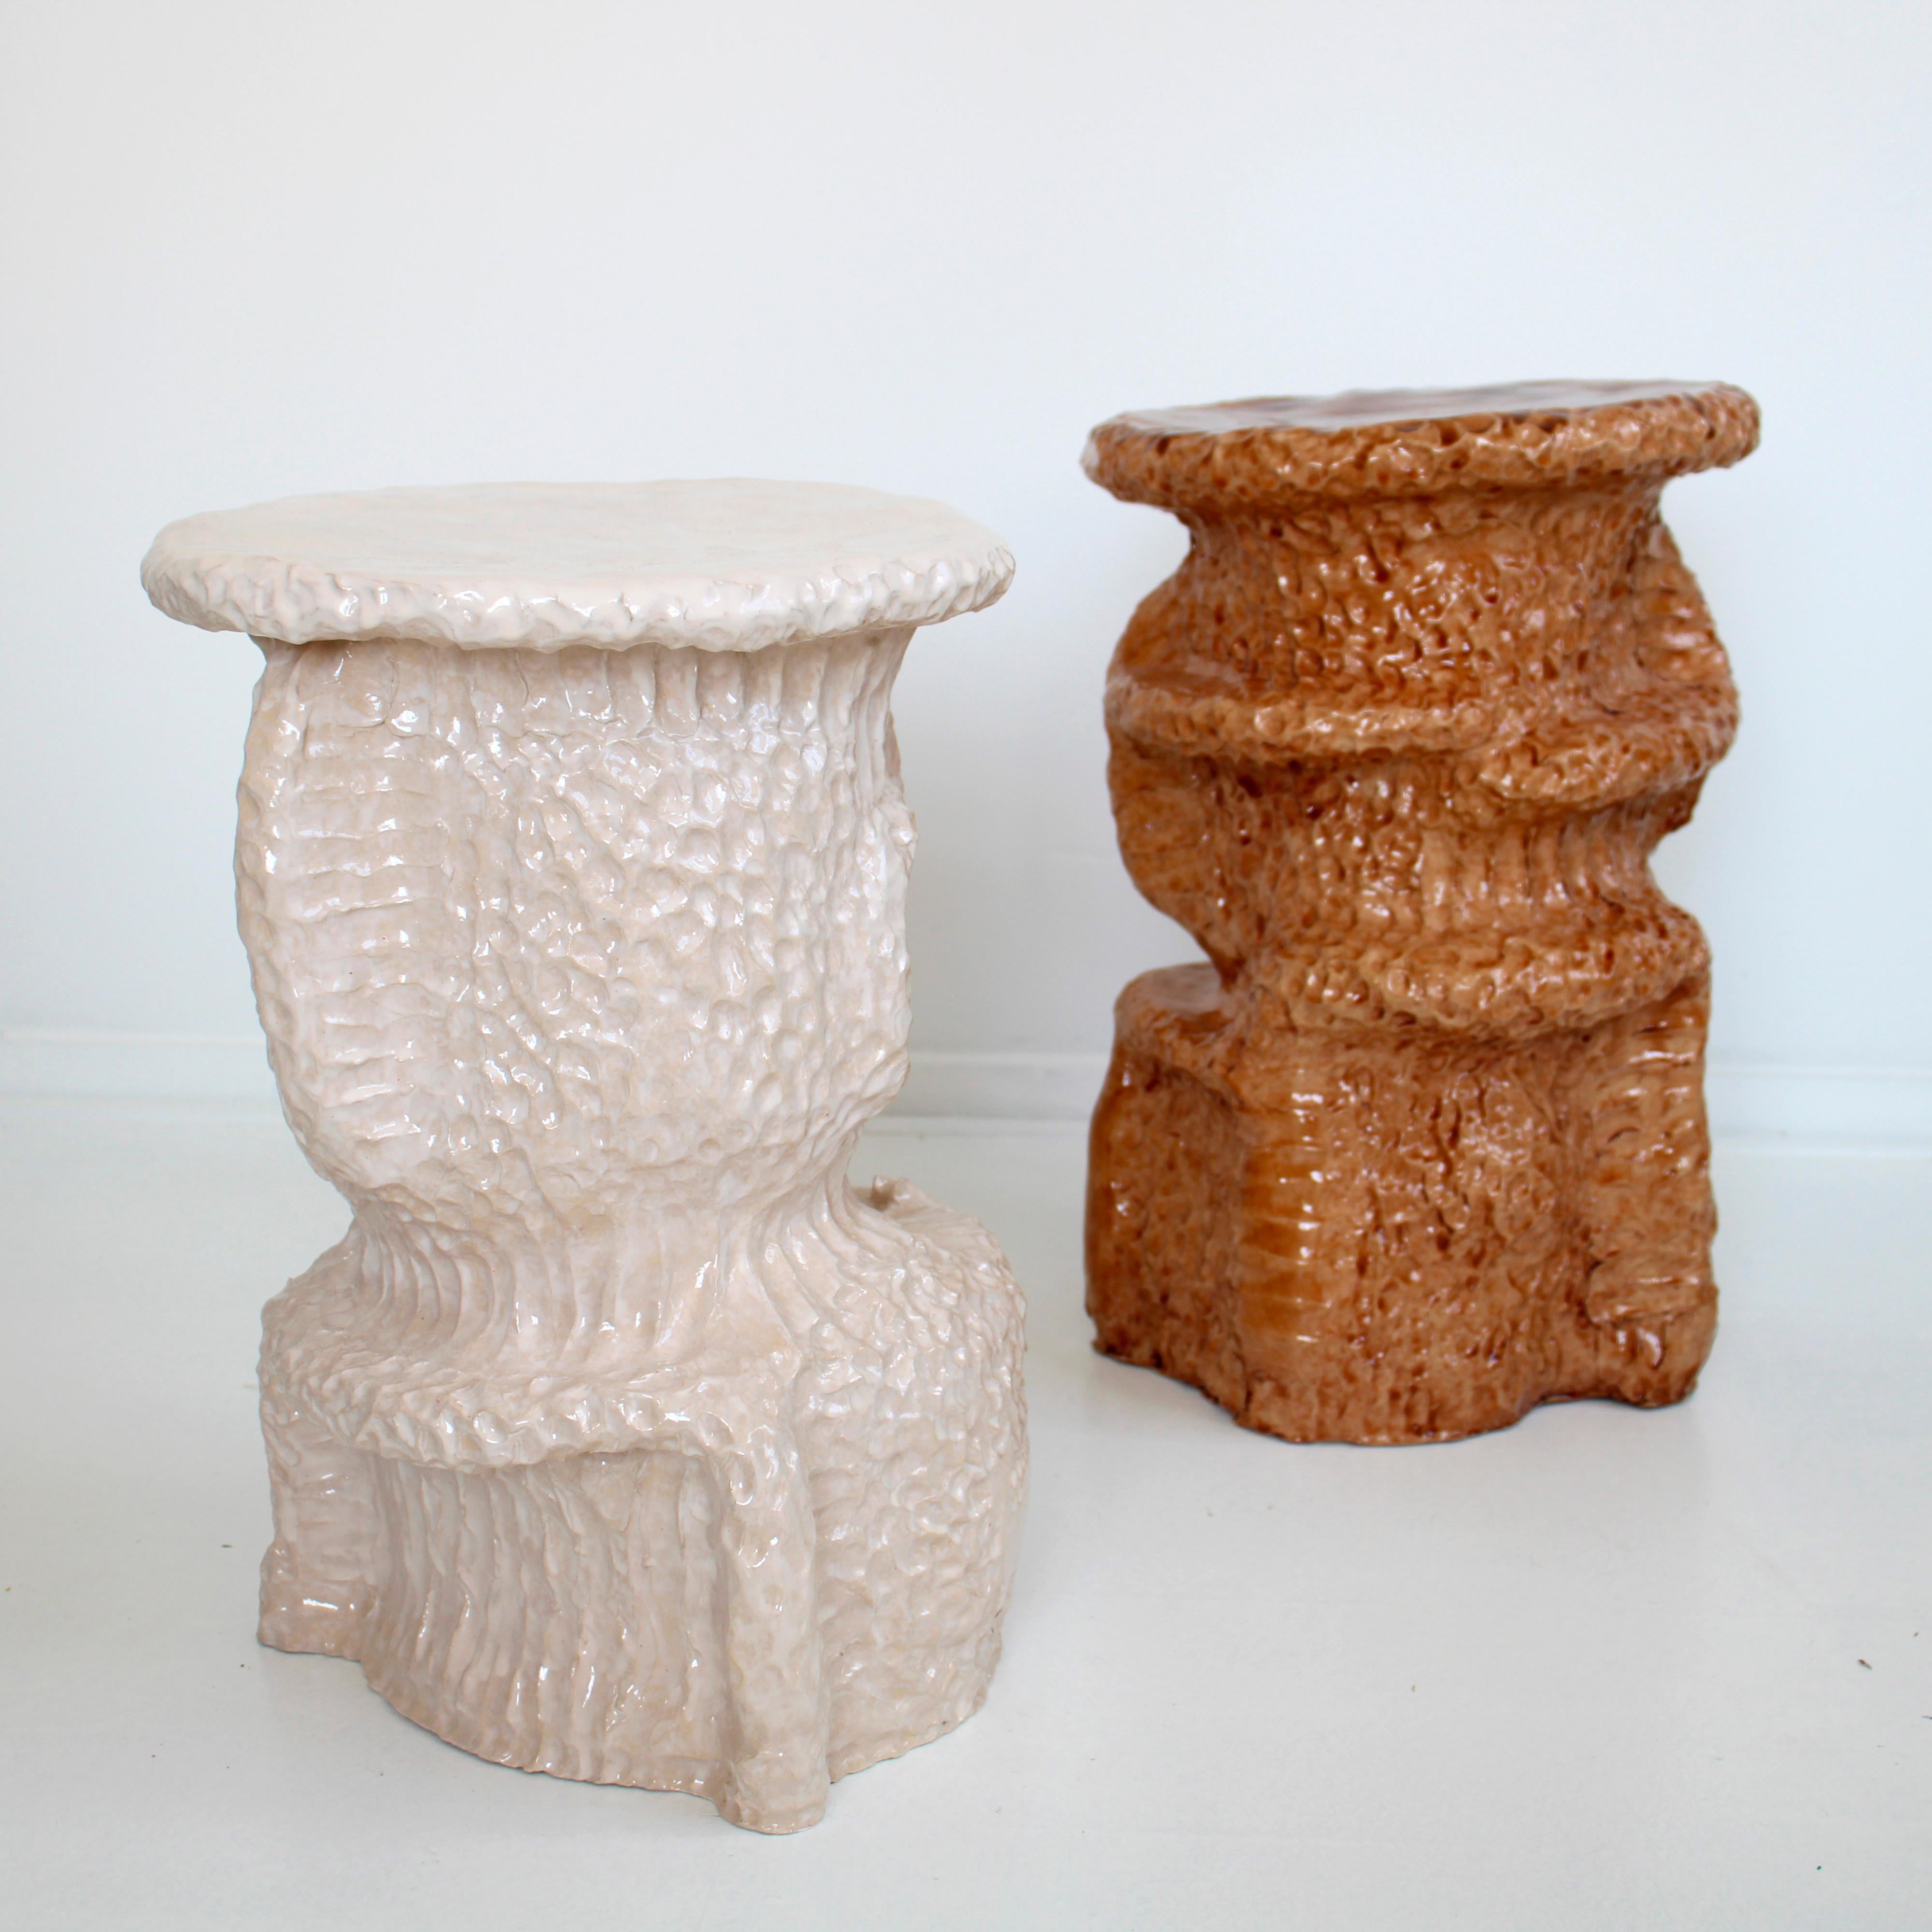 Post-Modern Contemporary Ceramic Furniture, Stool, 2020, Rutger de Regt, the Netherlands